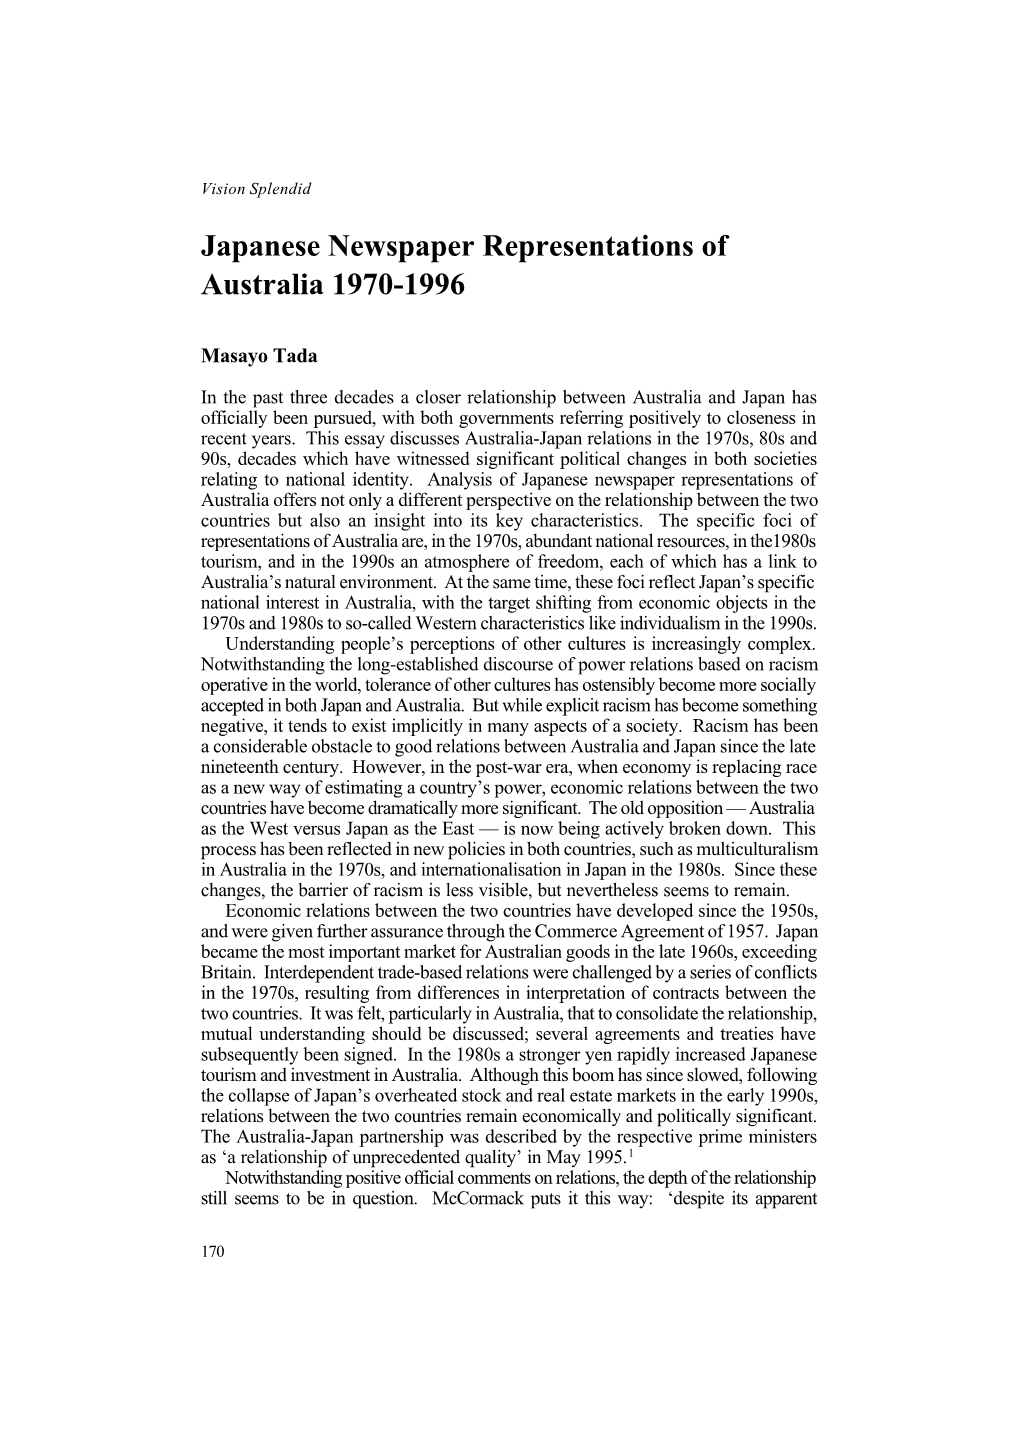 Japanese Newspaper Representations of Australia 1970-1996